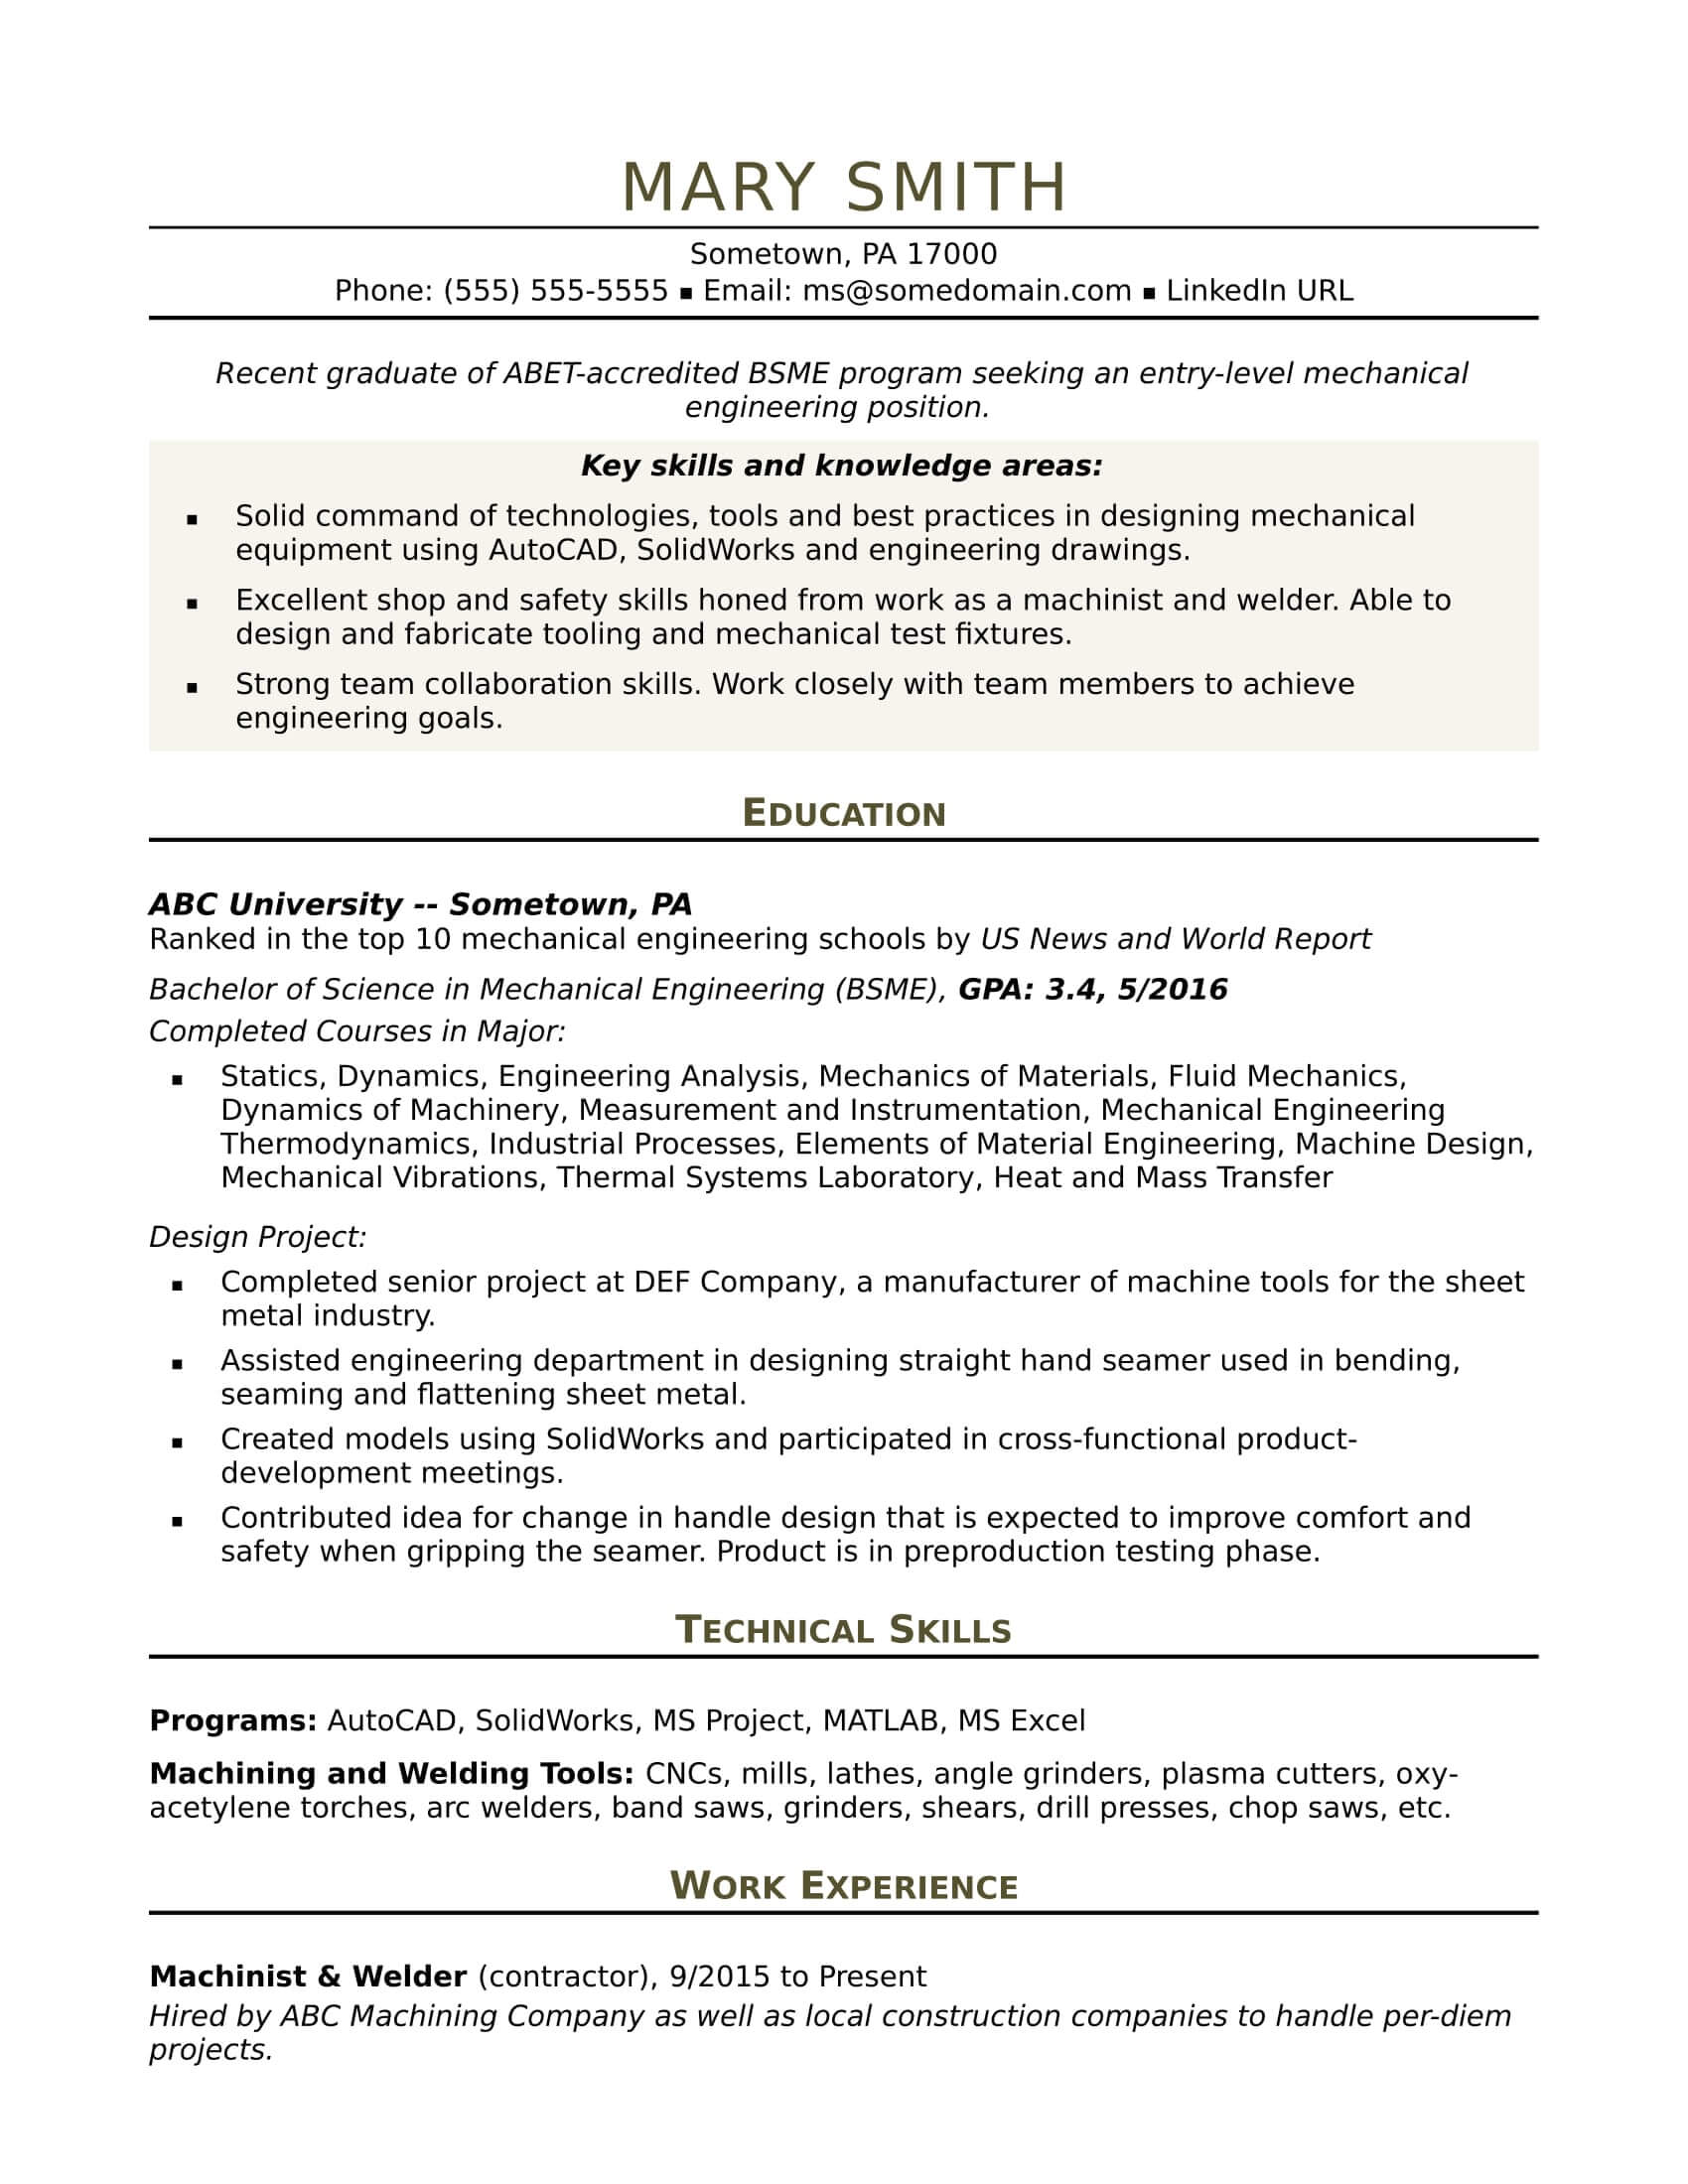 Sample Resume For An Entry Level Mechanical Engineer Inside Mechanic Job Card Template